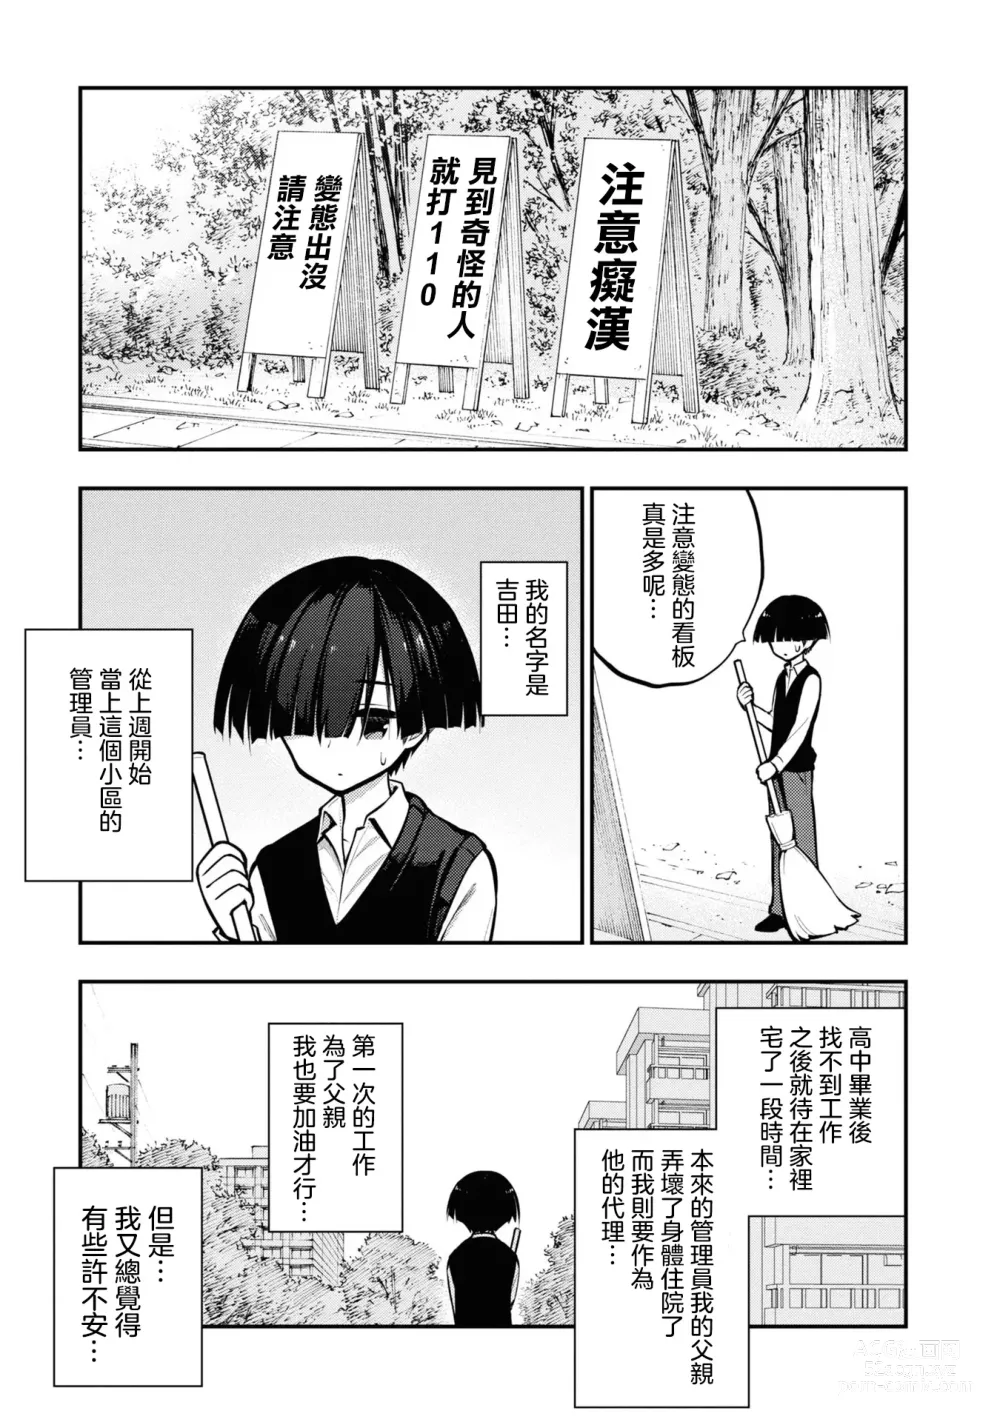 Page 7 of doujinshi 愛情社區